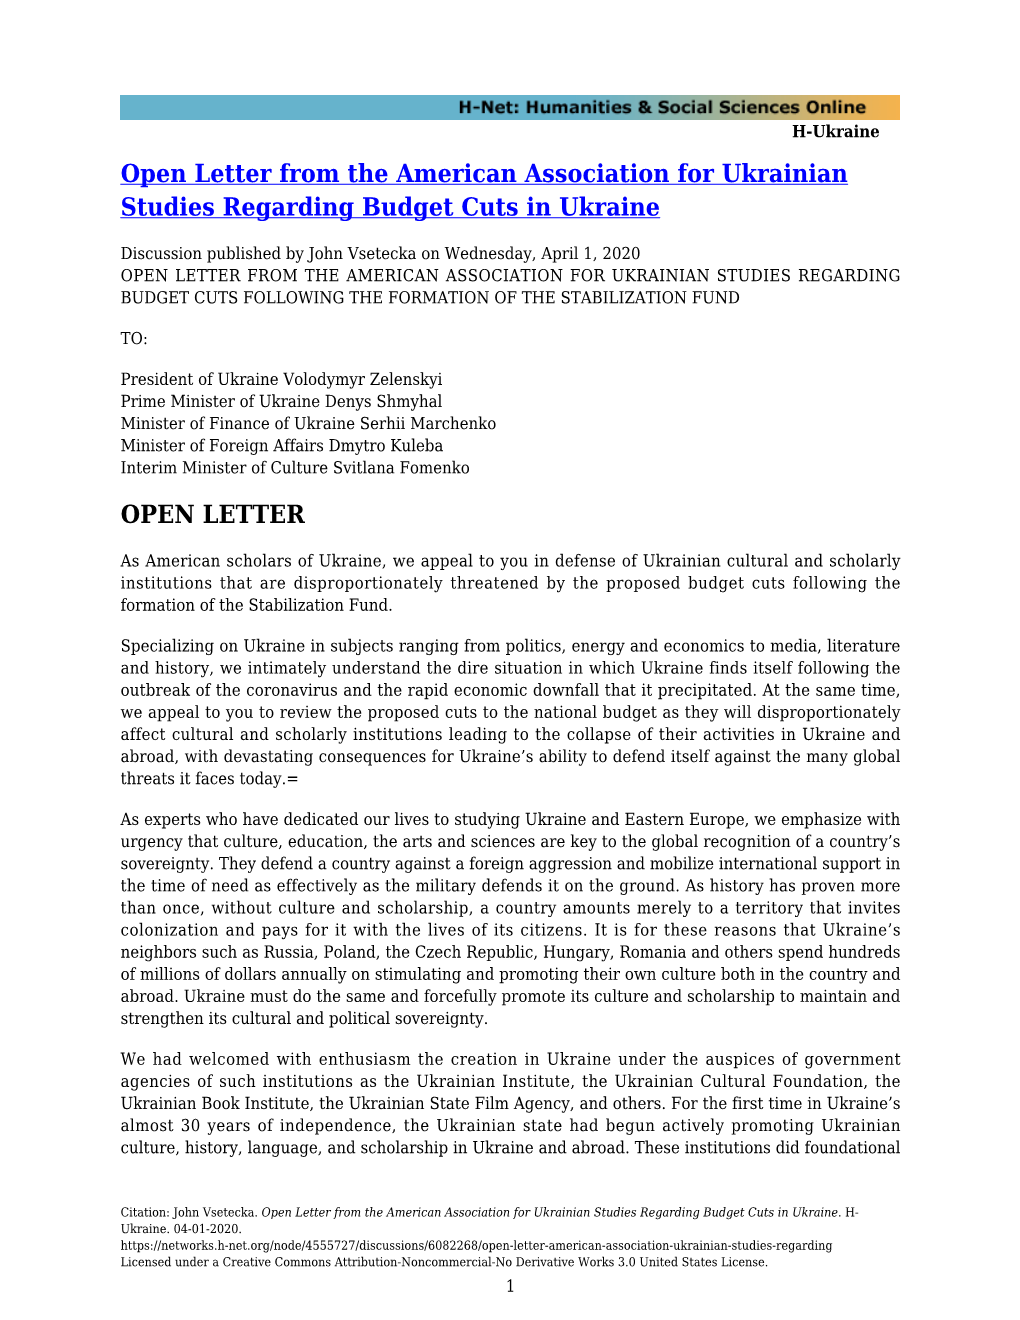 Open Letter from the American Association for Ukrainian Studies Regarding Budget Cuts in Ukraine